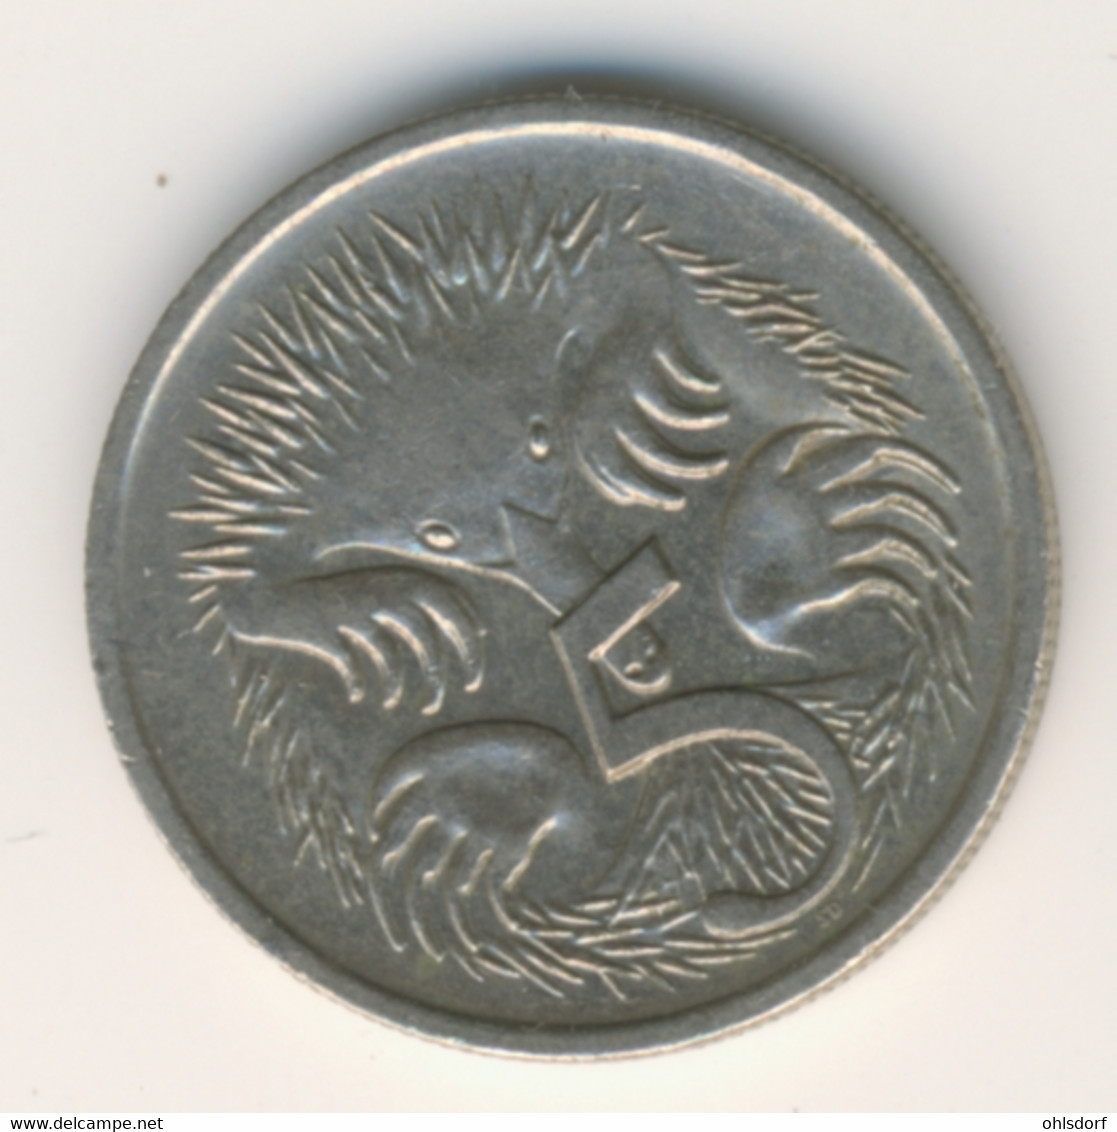 AUSTRALIA 1989: 5 Cents, KM 80 - 5 Cents